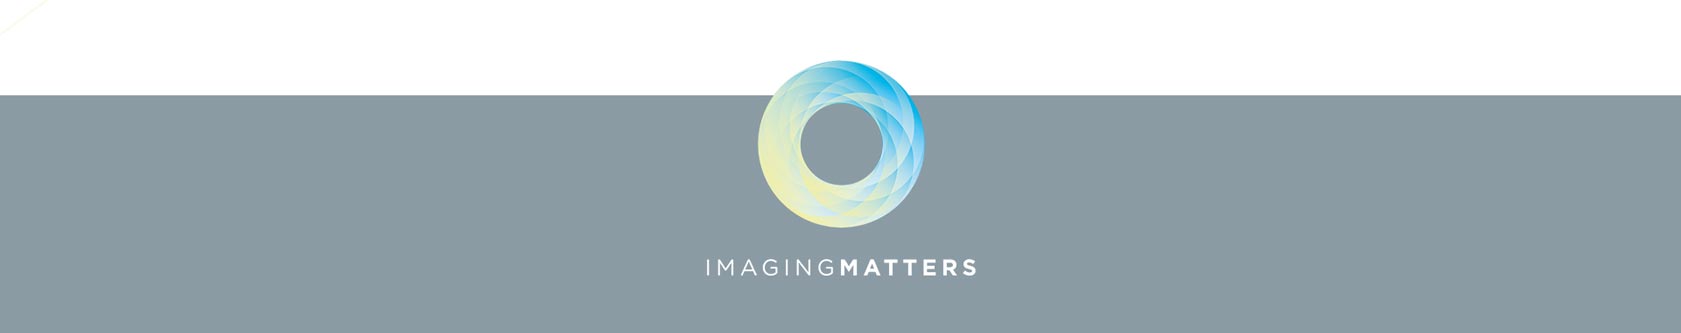 imaging matters - footer logo